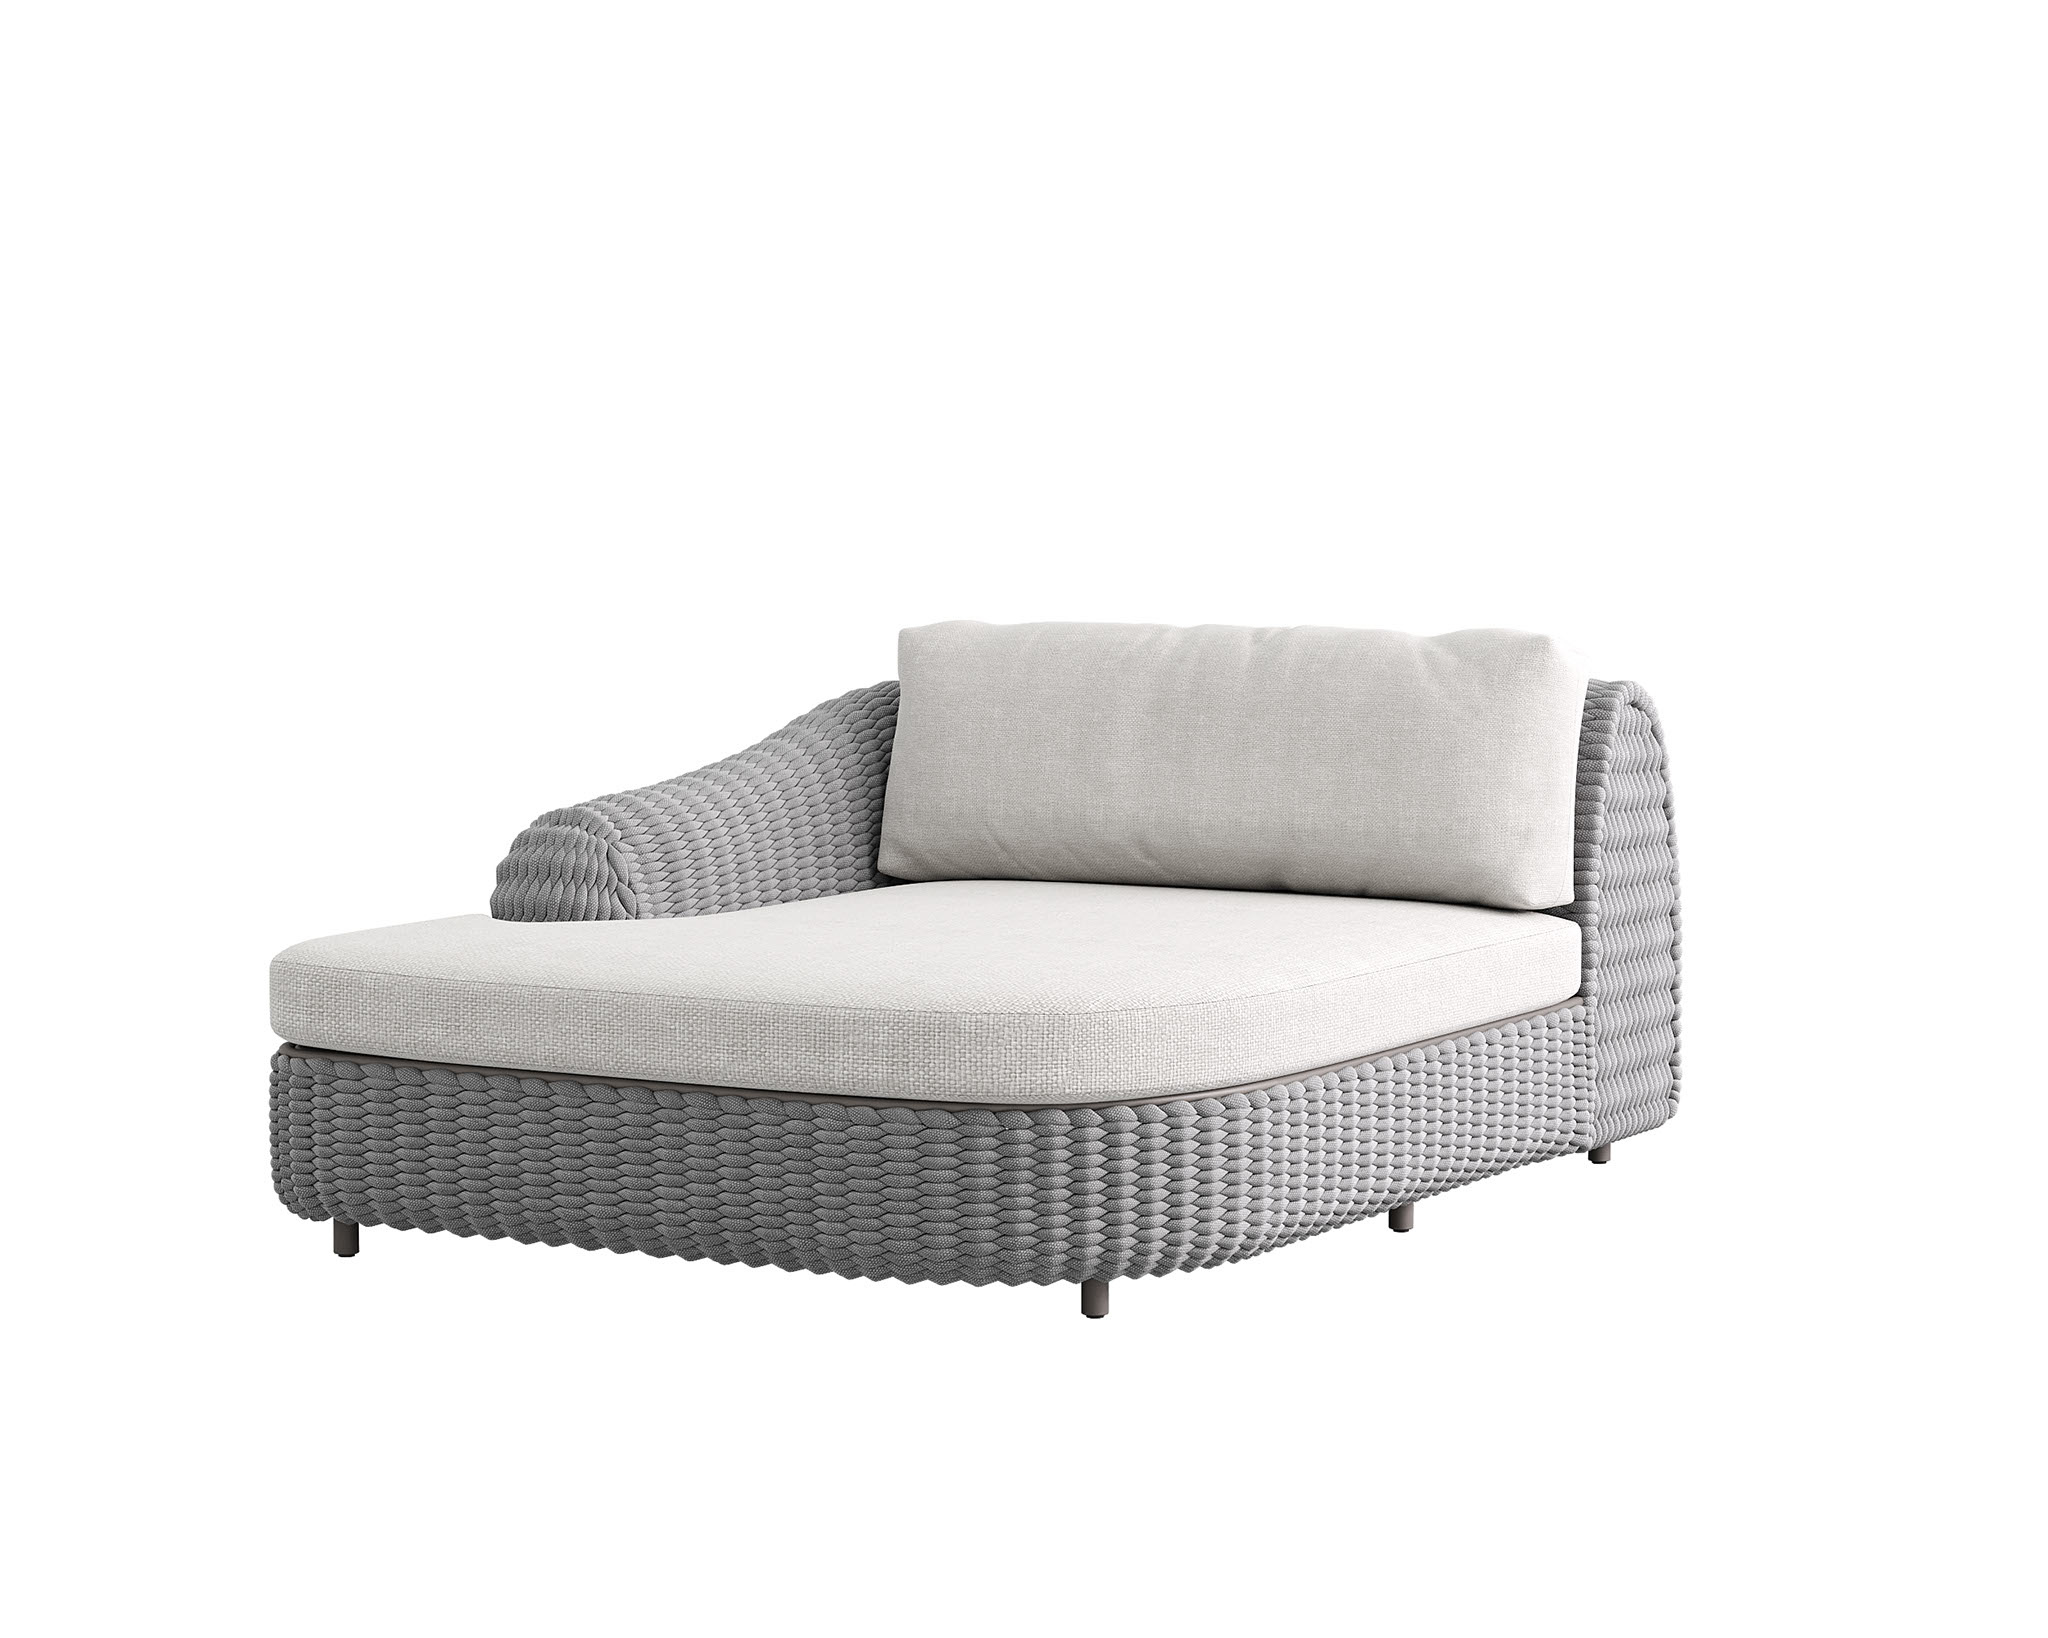 Borek chaise longue links - Slate - Wilhelmina Designs